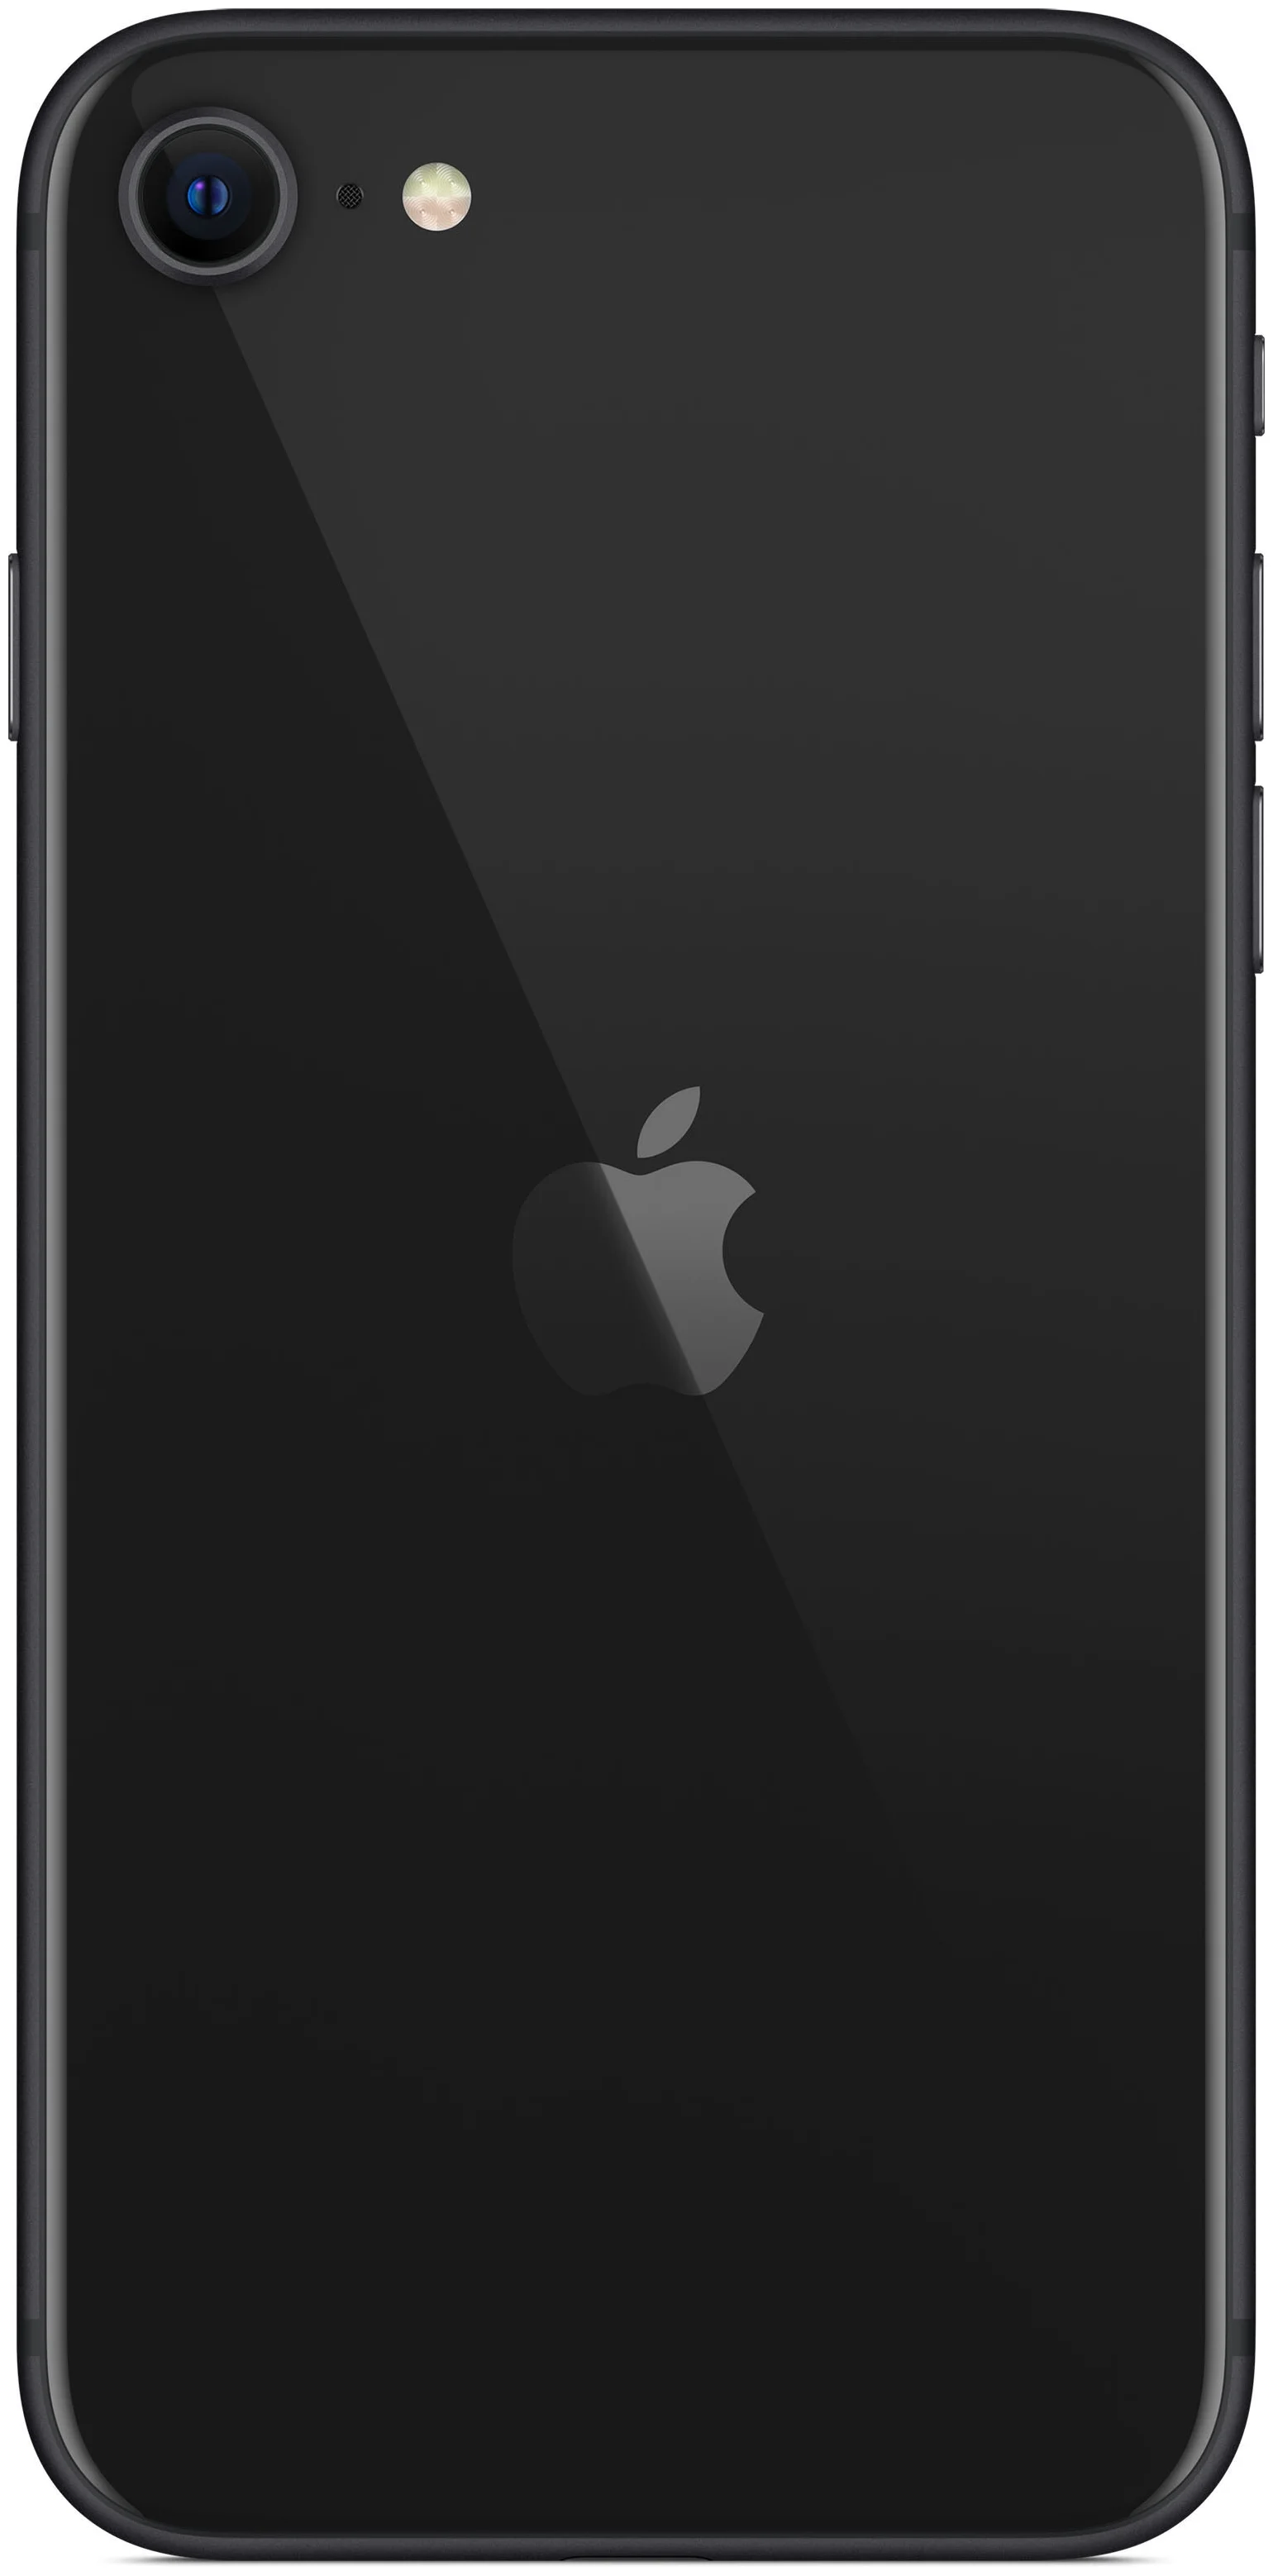 Apple iPhone SE 2020 256GB - операционная система: iOS 13